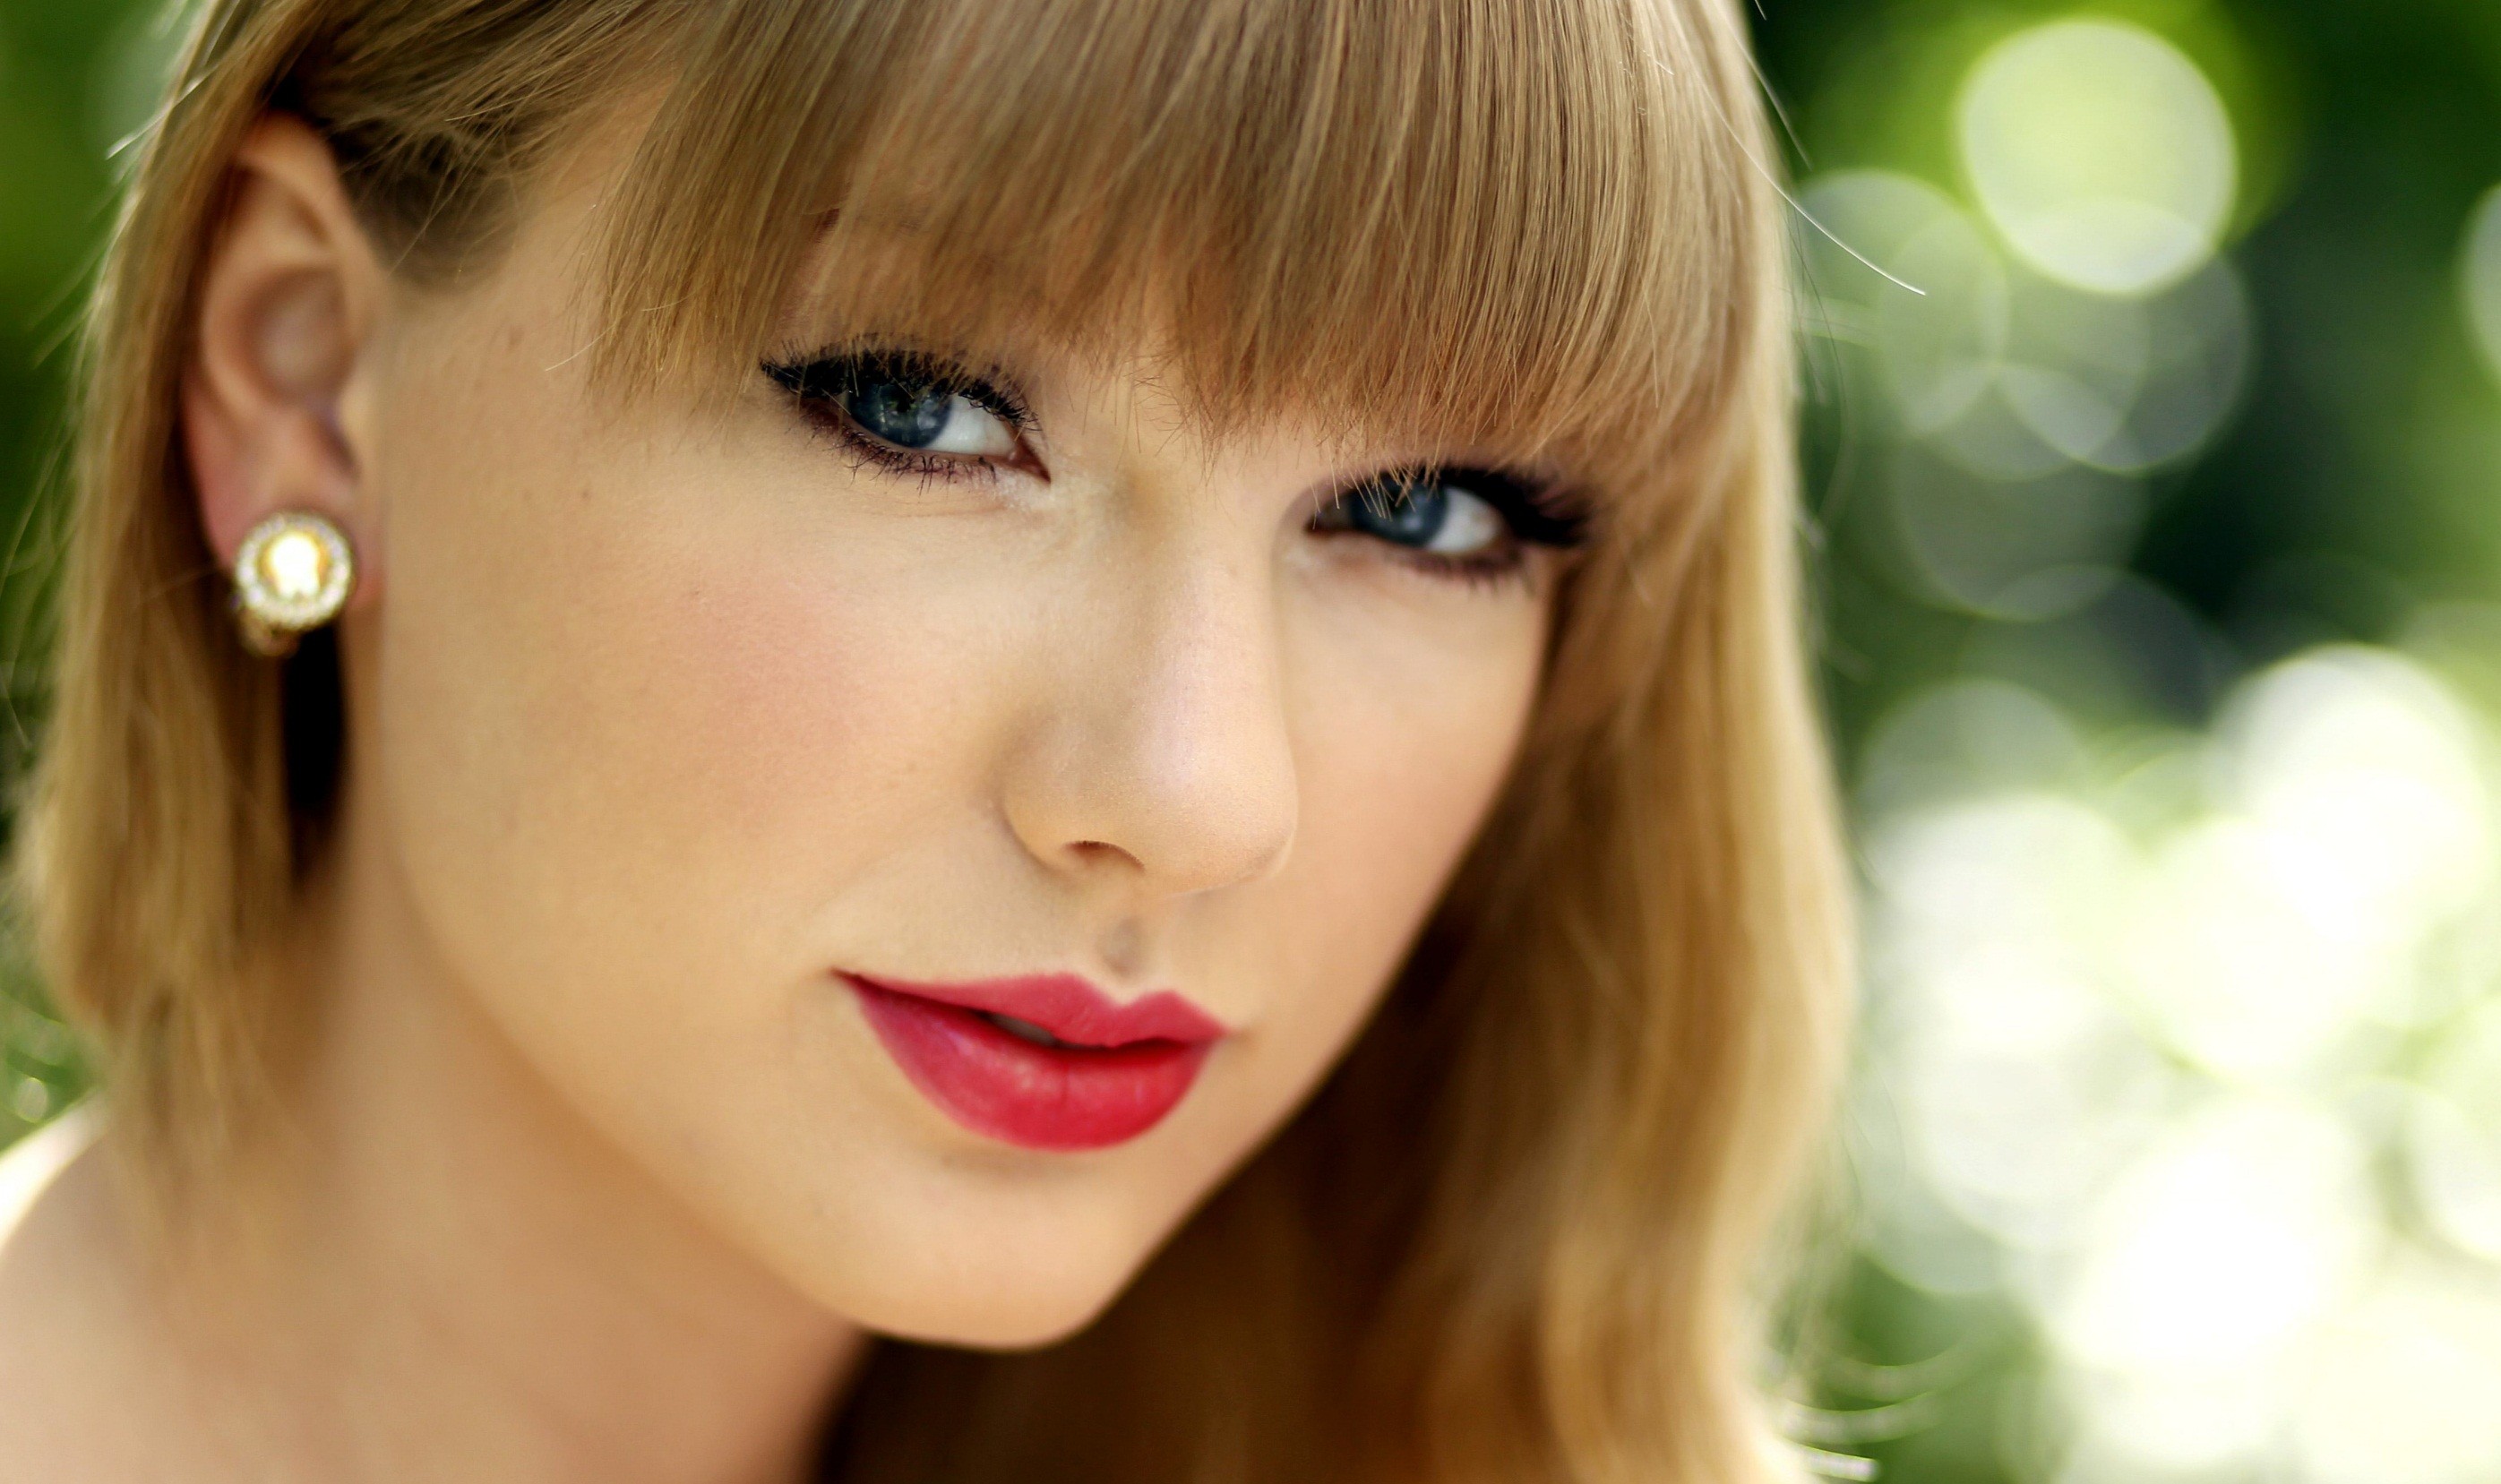 Taylor Swift Women Singer Face Blonde Closeup Red Lipstick Blue Eyes Ear Studs Looking At Viewer 2792x1657